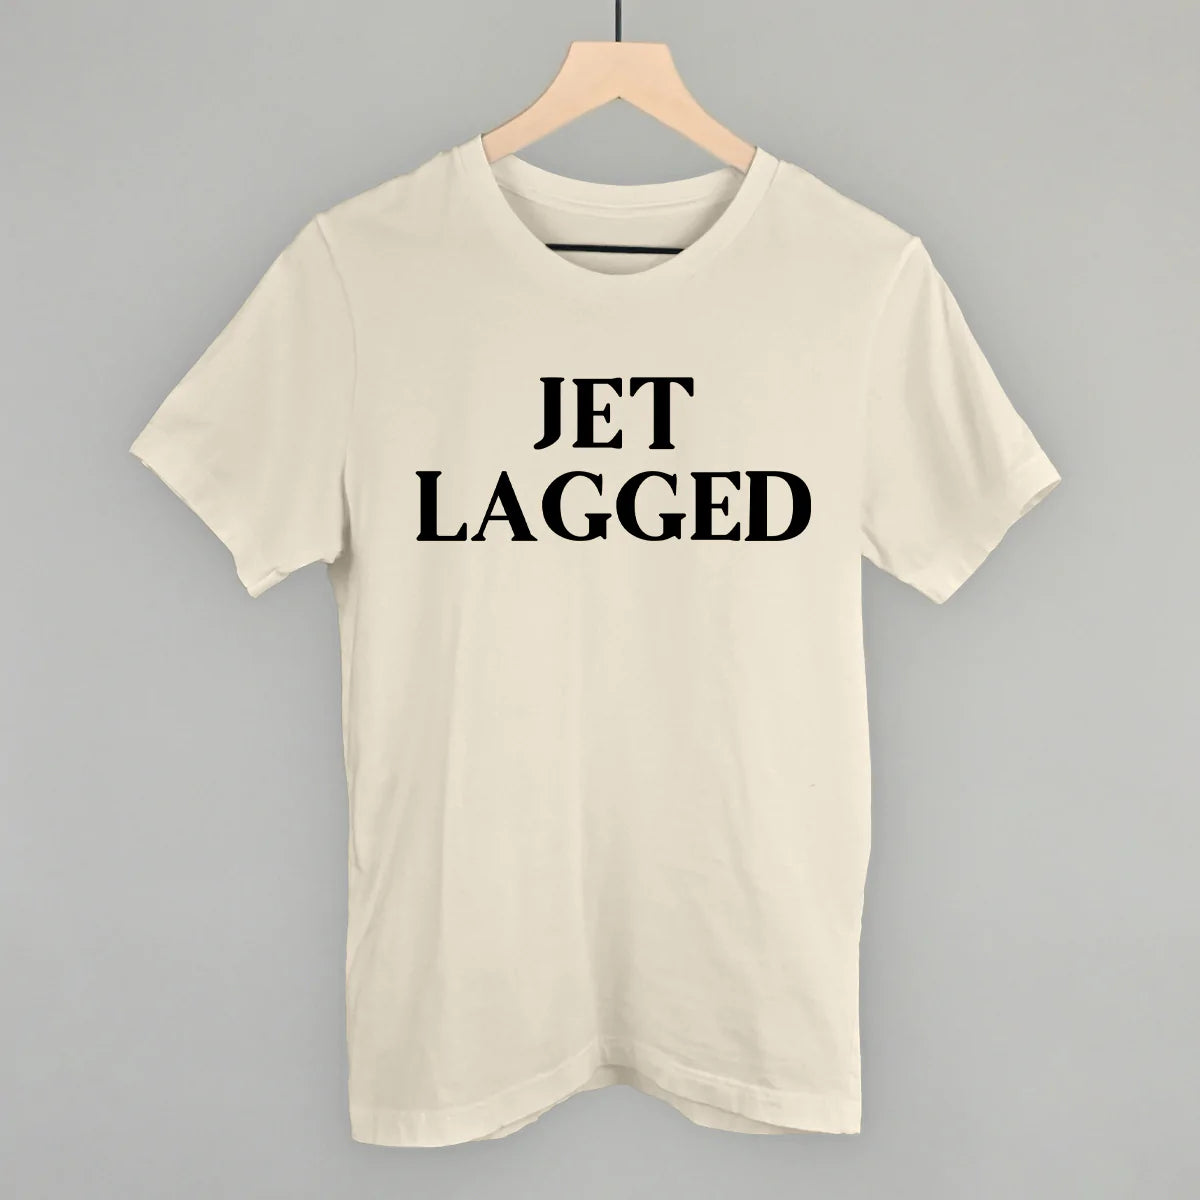 Jet Lagged